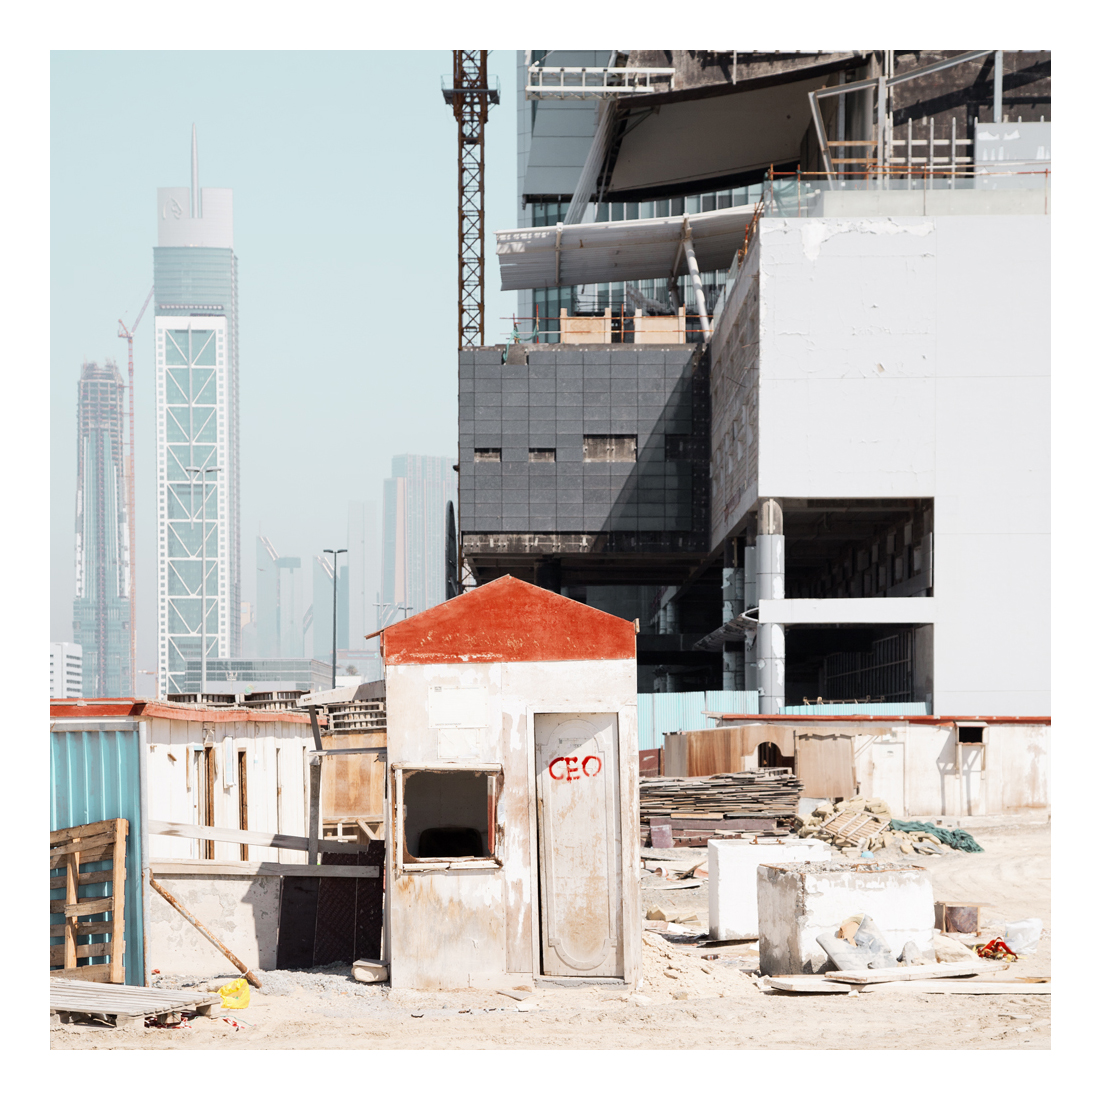 Gorgeous Windswept Photos Of Dubai’s Booming, Bloated Metropolis